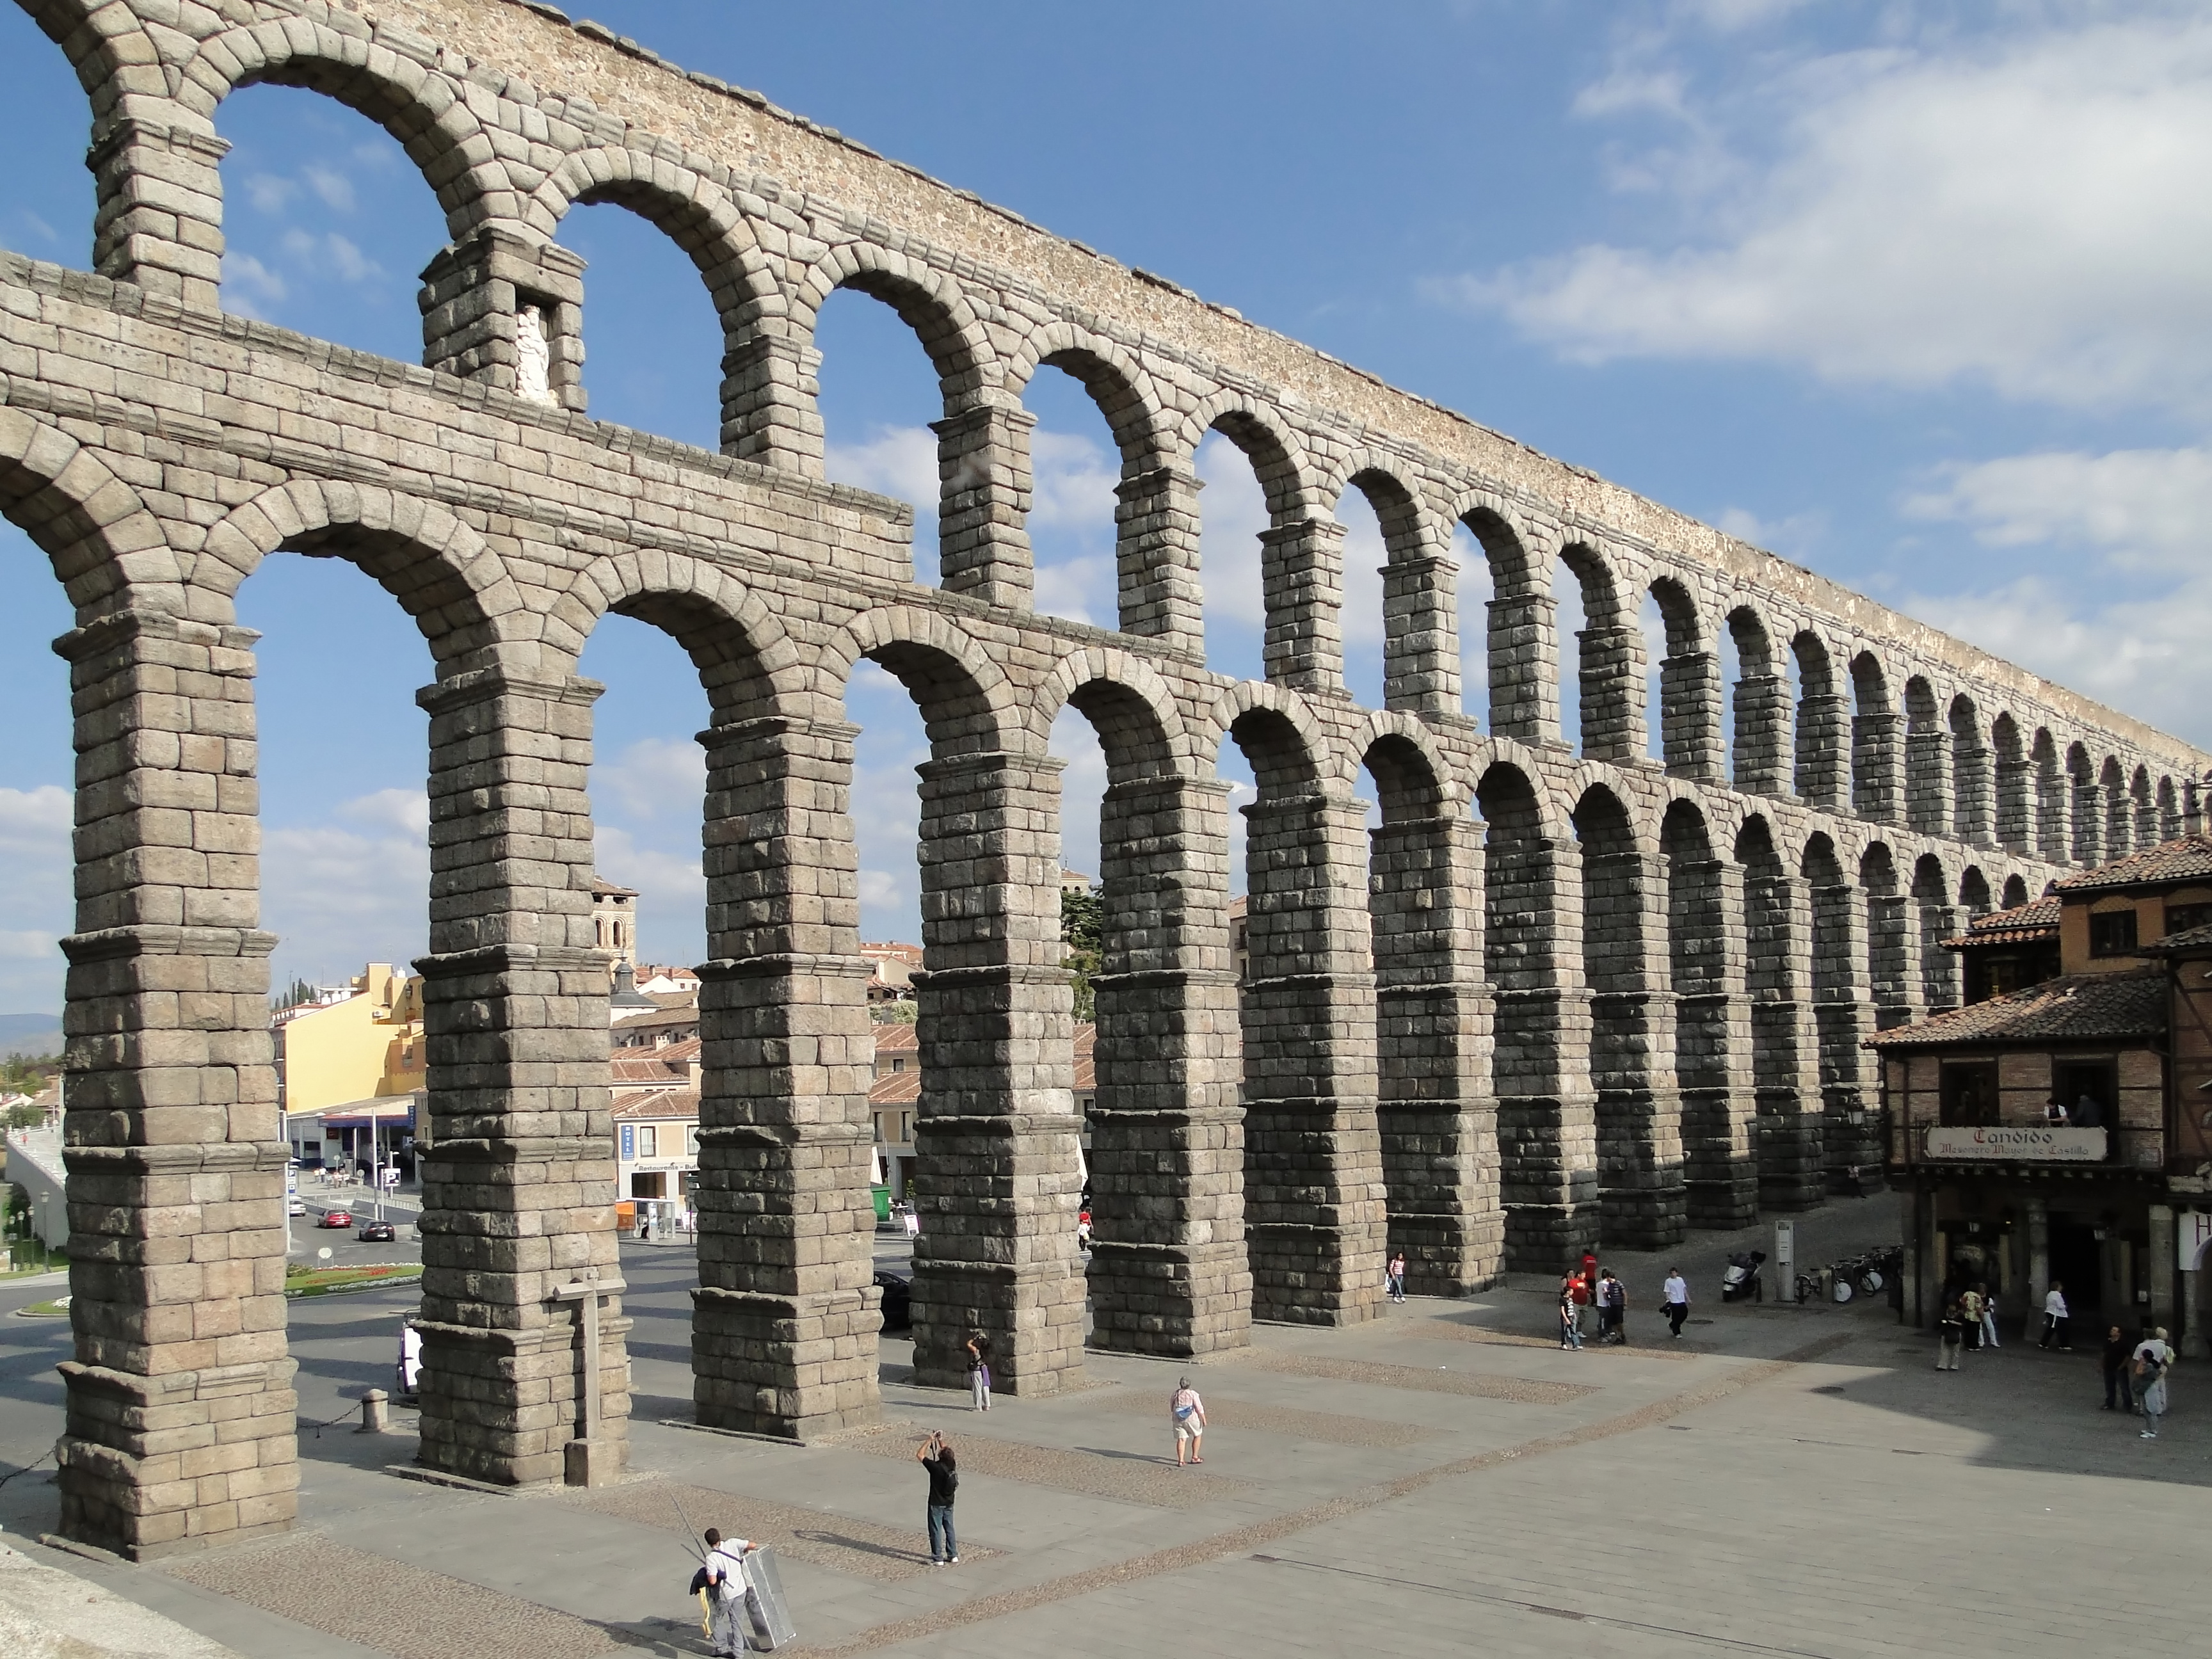 Roman aqueduct - Wikipedia